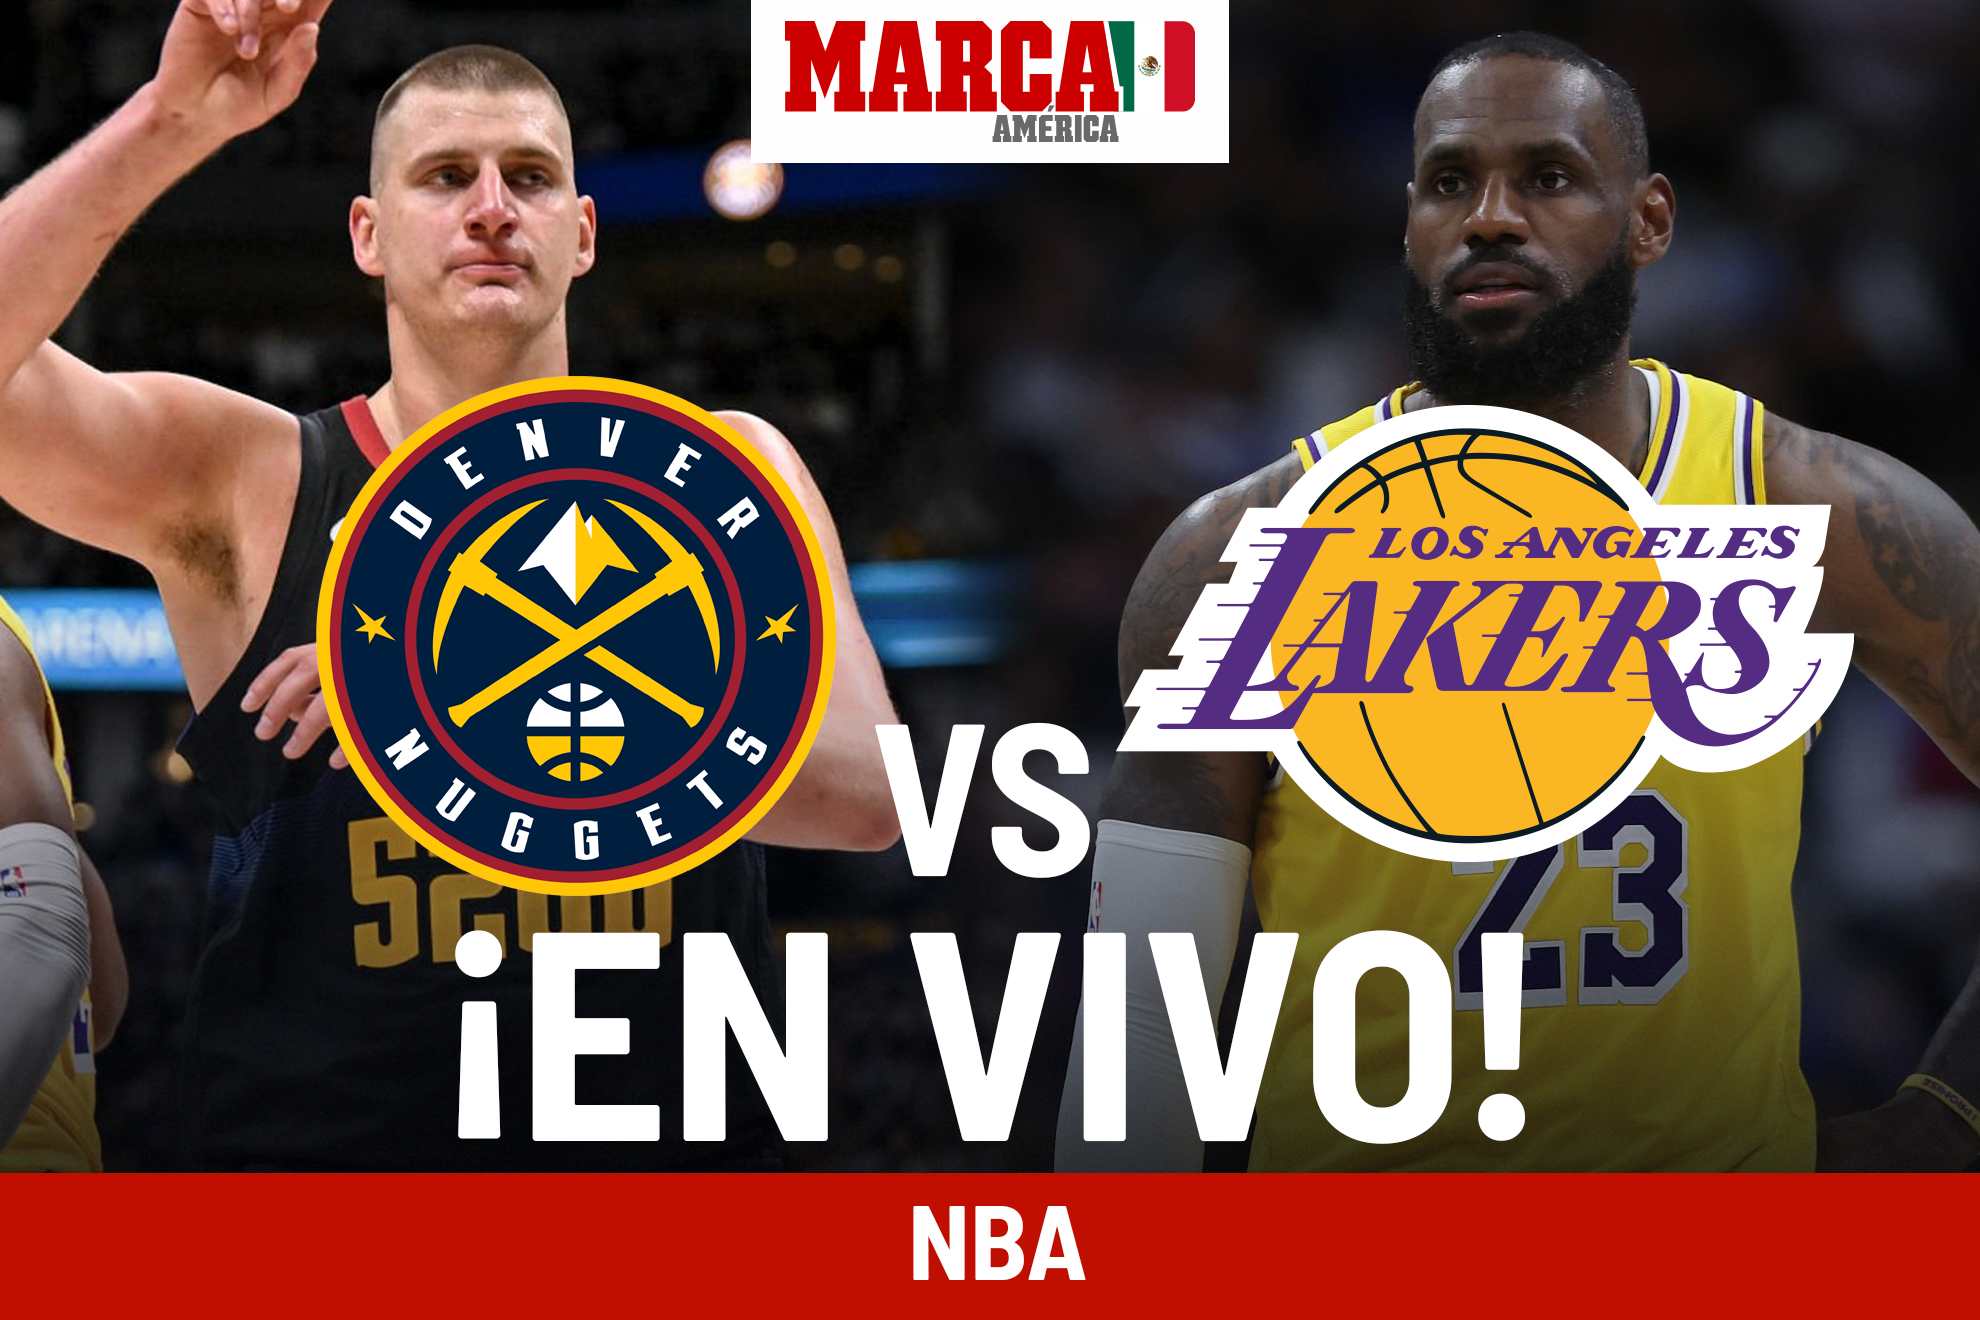 Lakers vs Nuggets EN VIVO Juego 4. Partido Playoffs NBA hoy